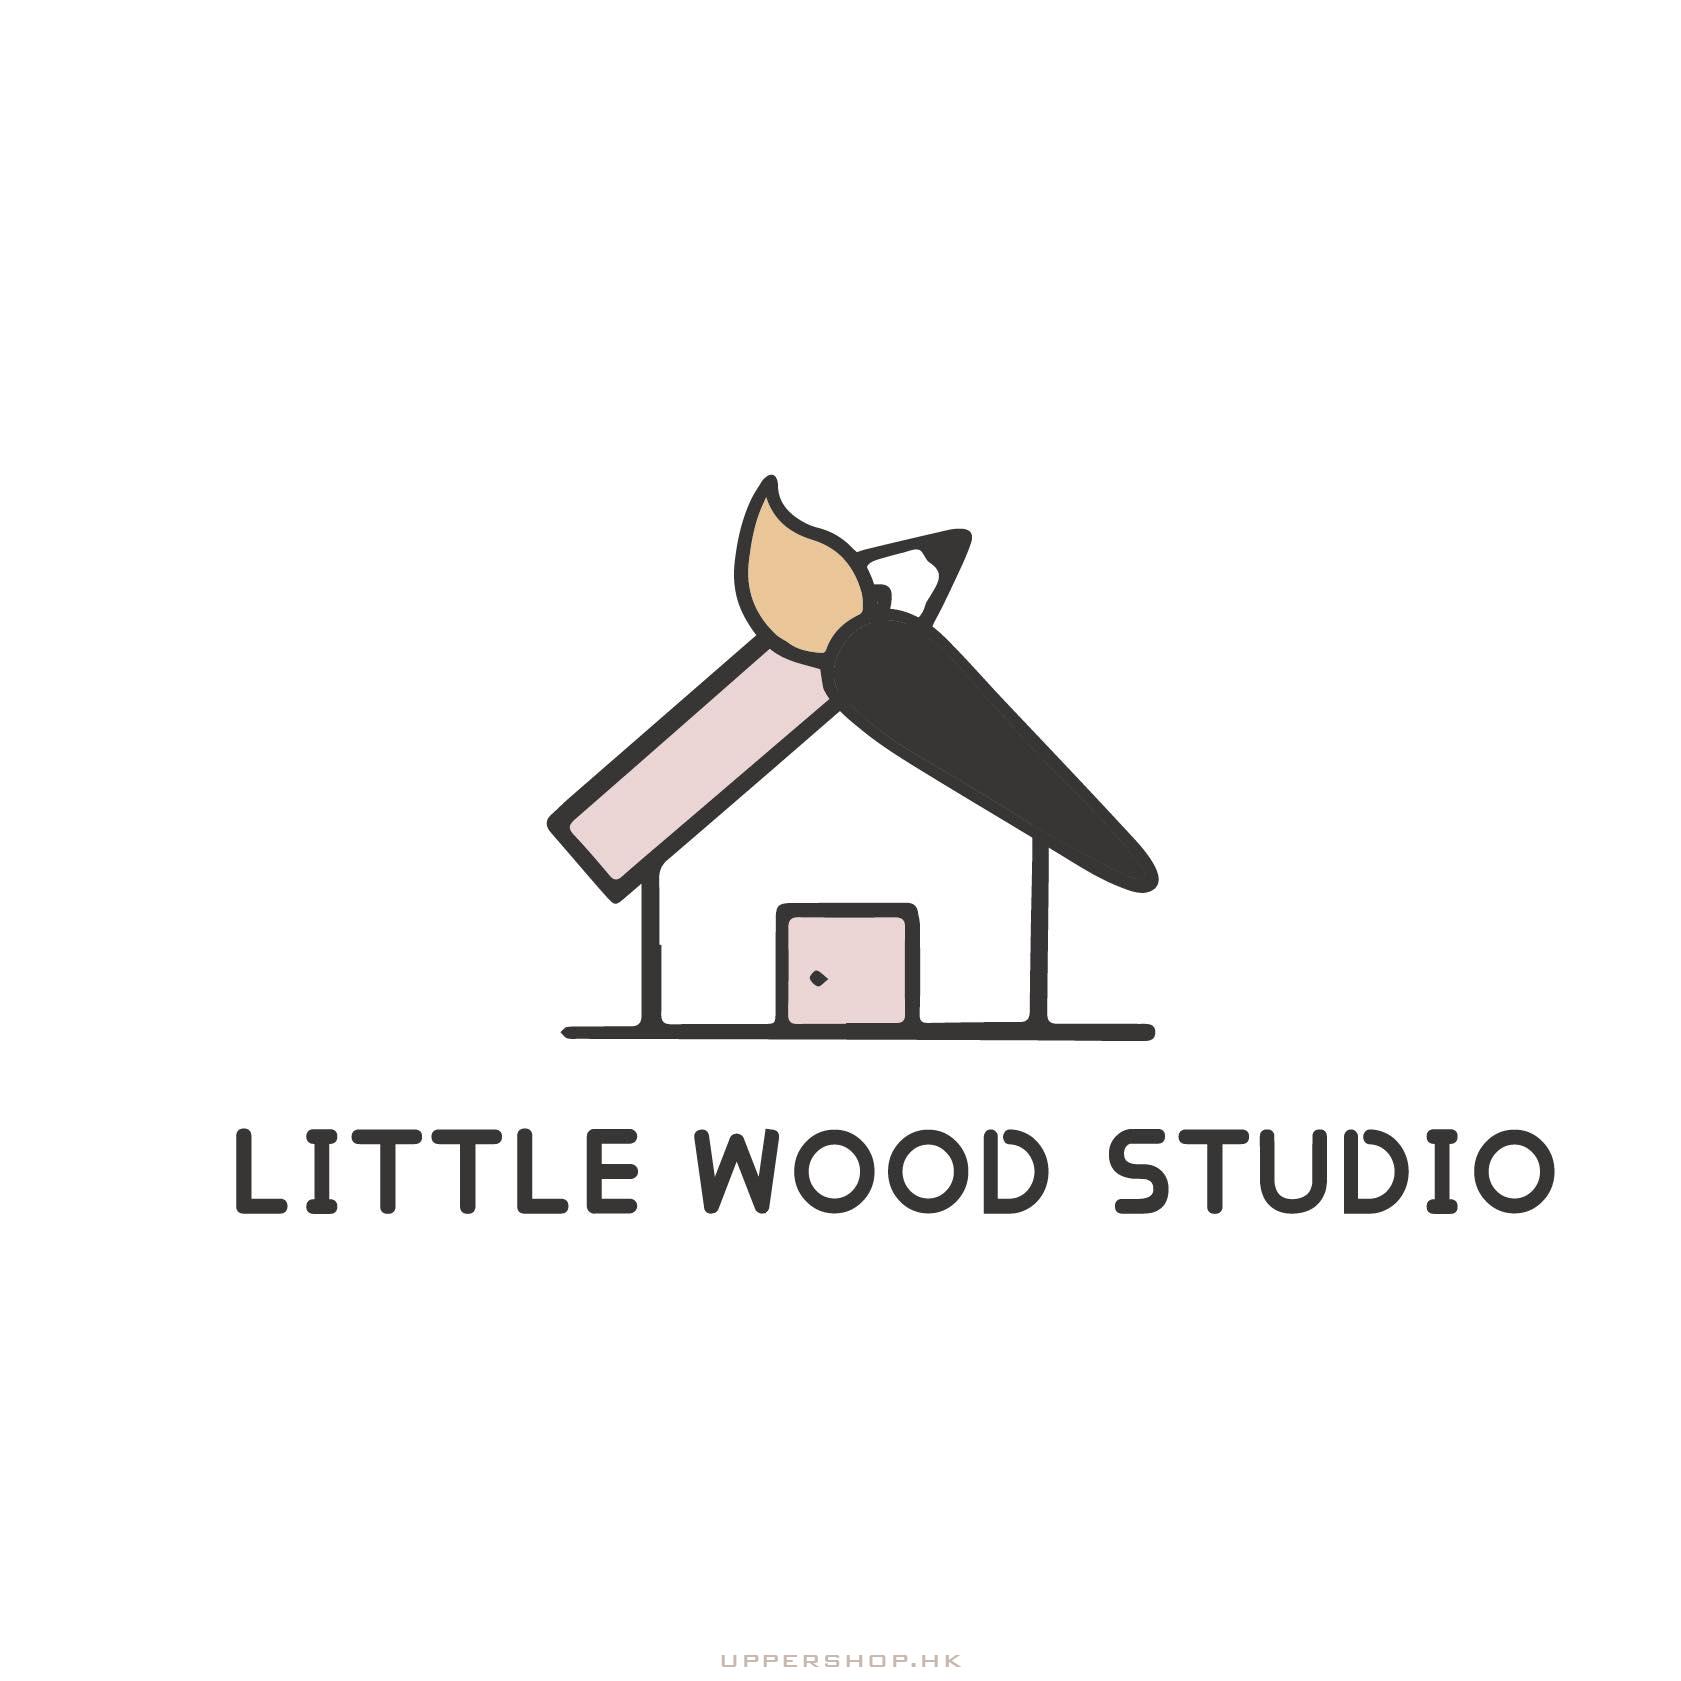 Little Wood Studio